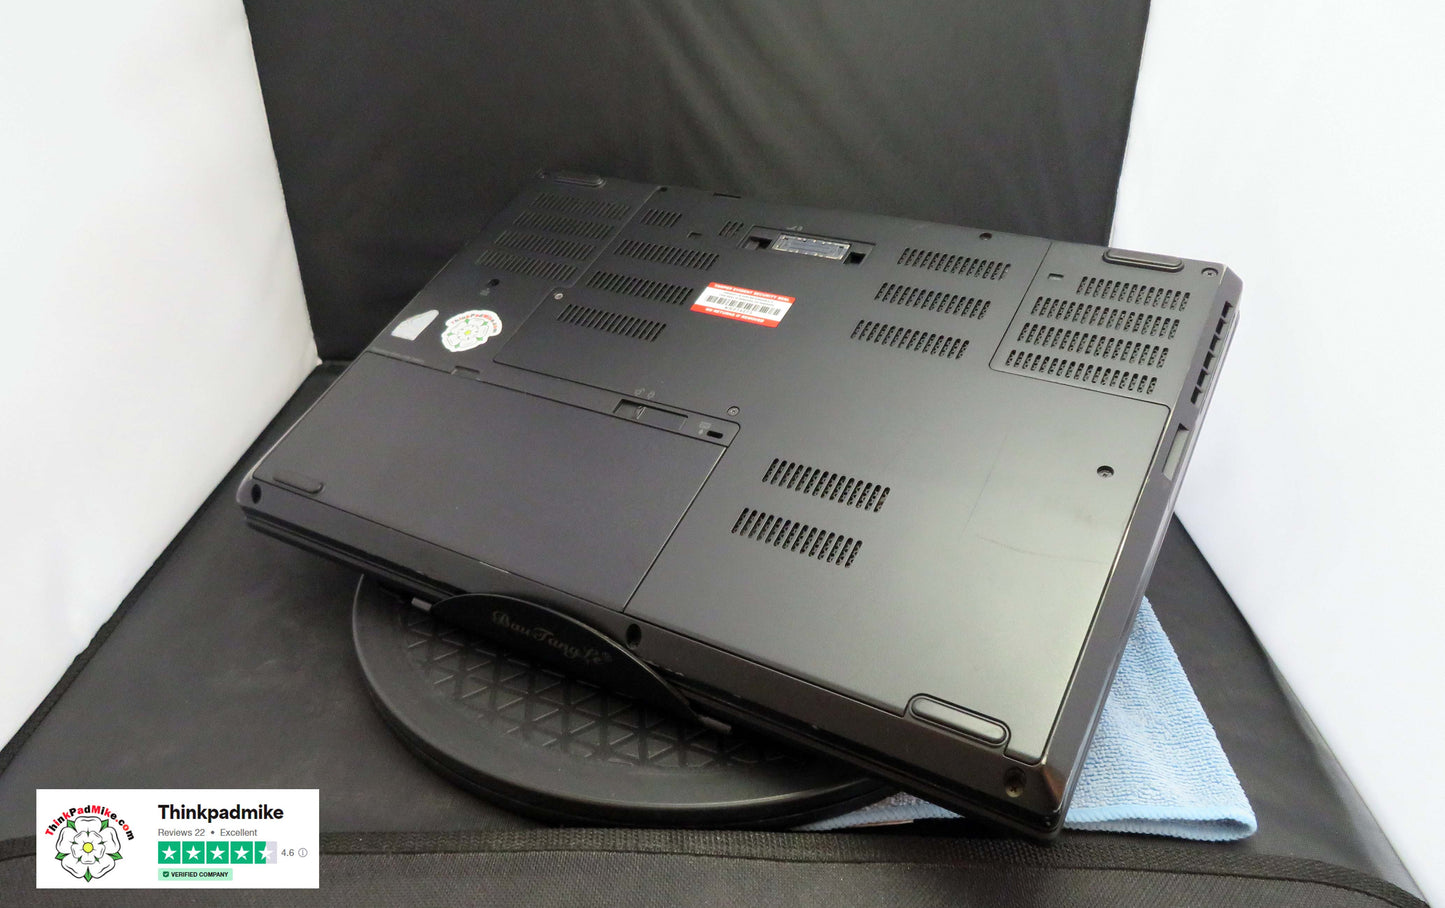 Lenovo ThinkPad P50 i7 6820HQ 32GB RAM 512GB SSD + 500GB HDD IPS NVIDIA (954)